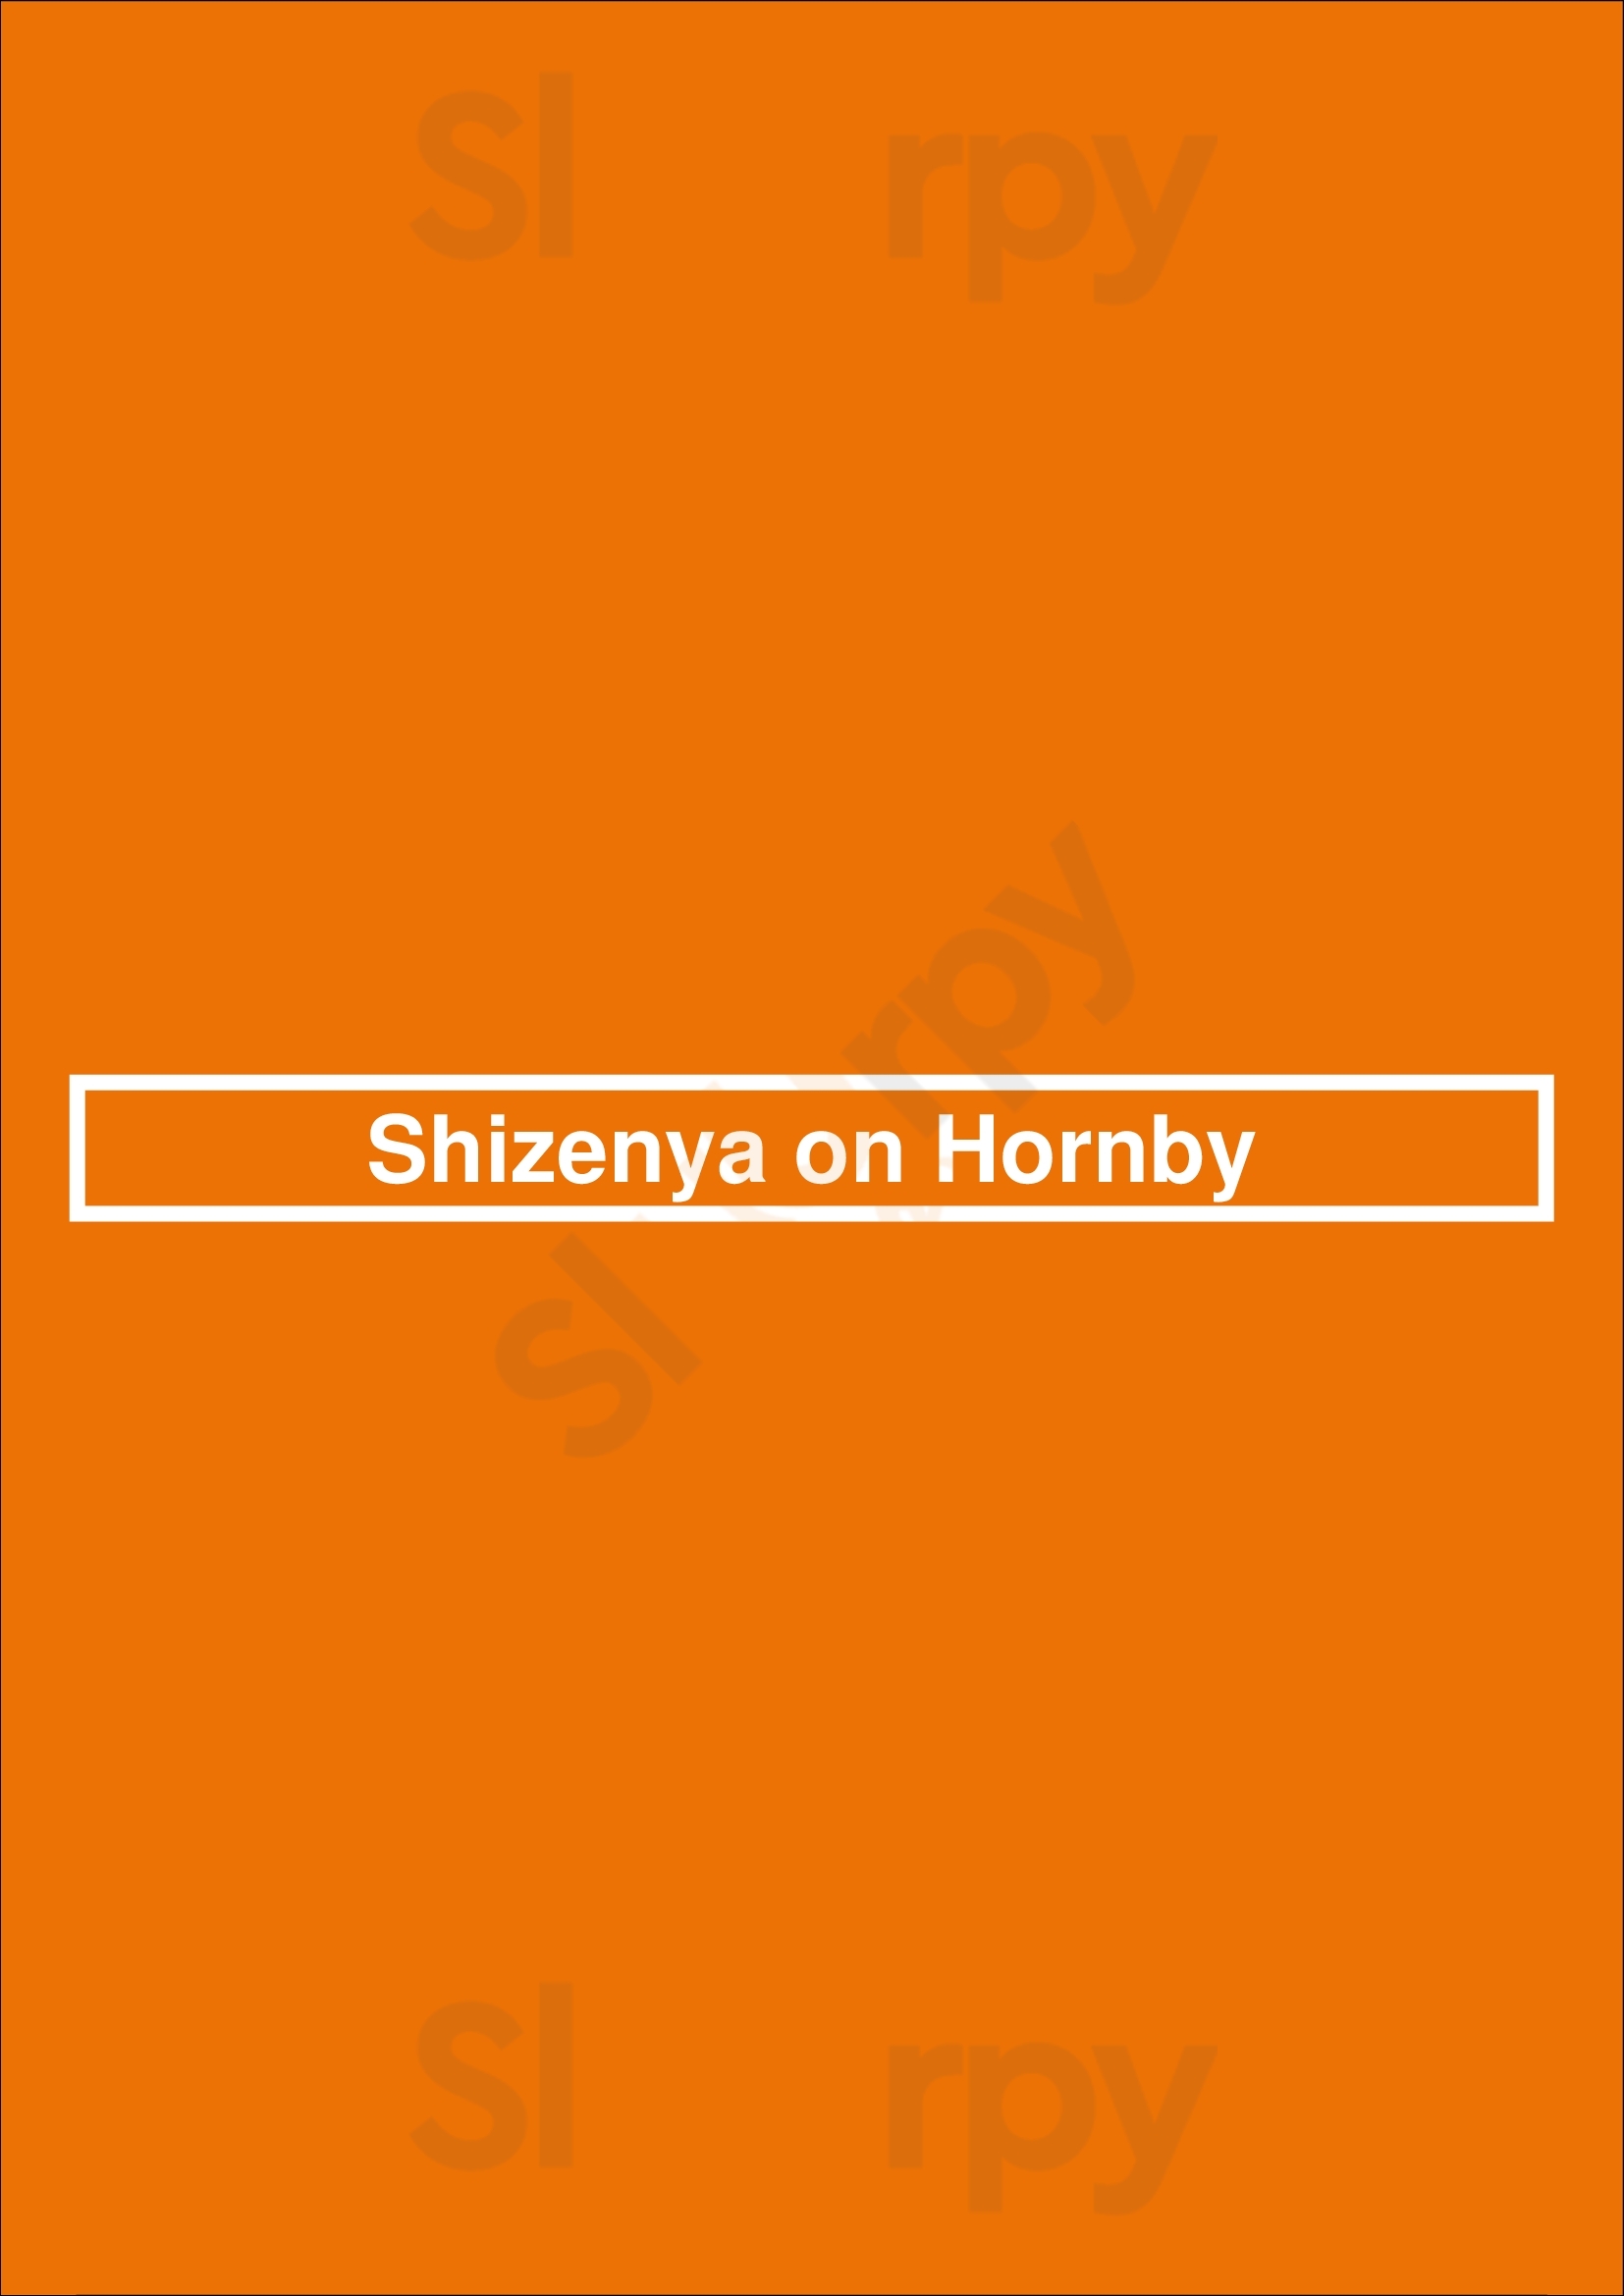 Shizenya On Hornby Vancouver Menu - 1